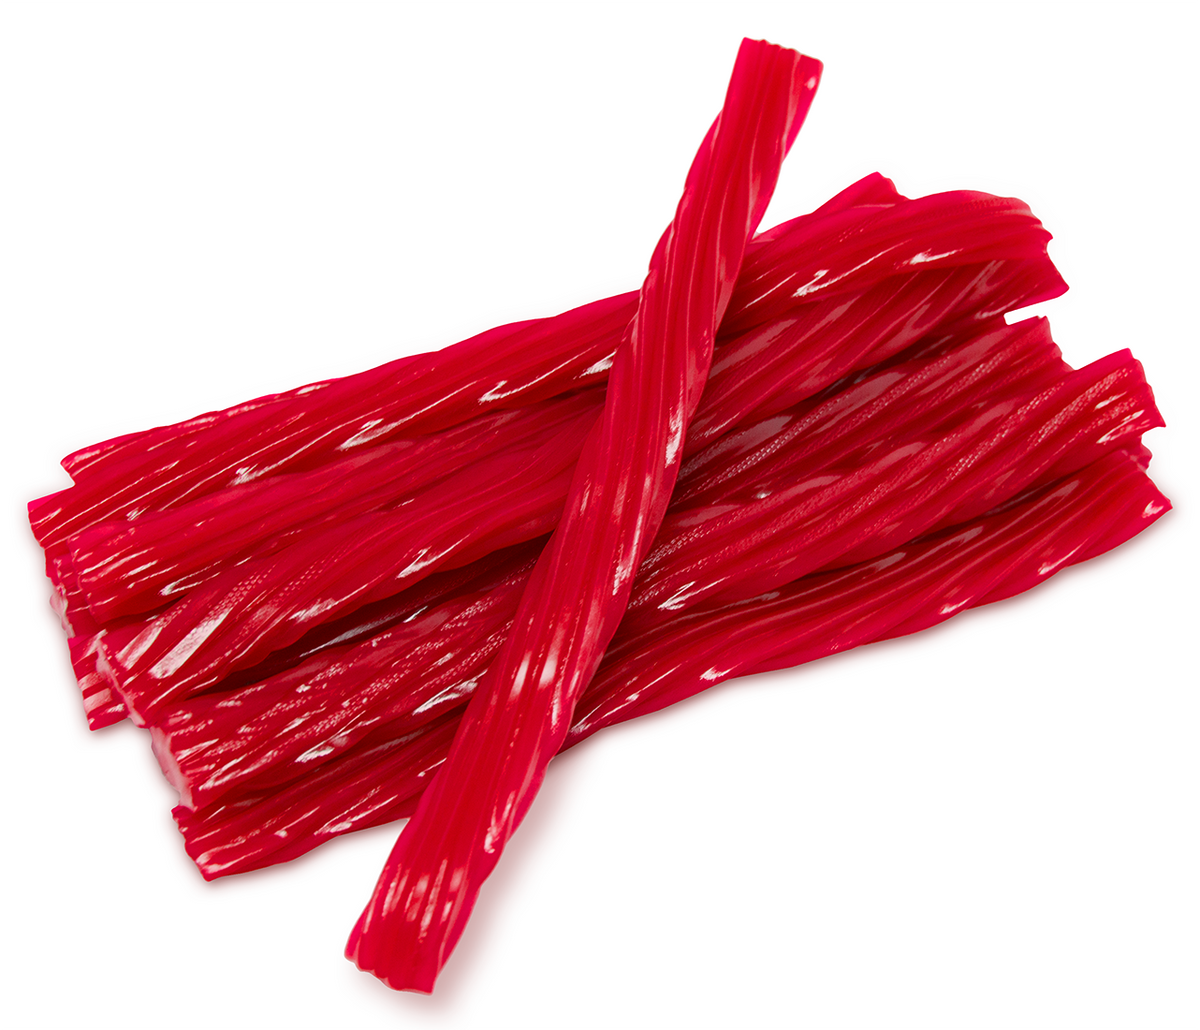 Red Licorice Sticks